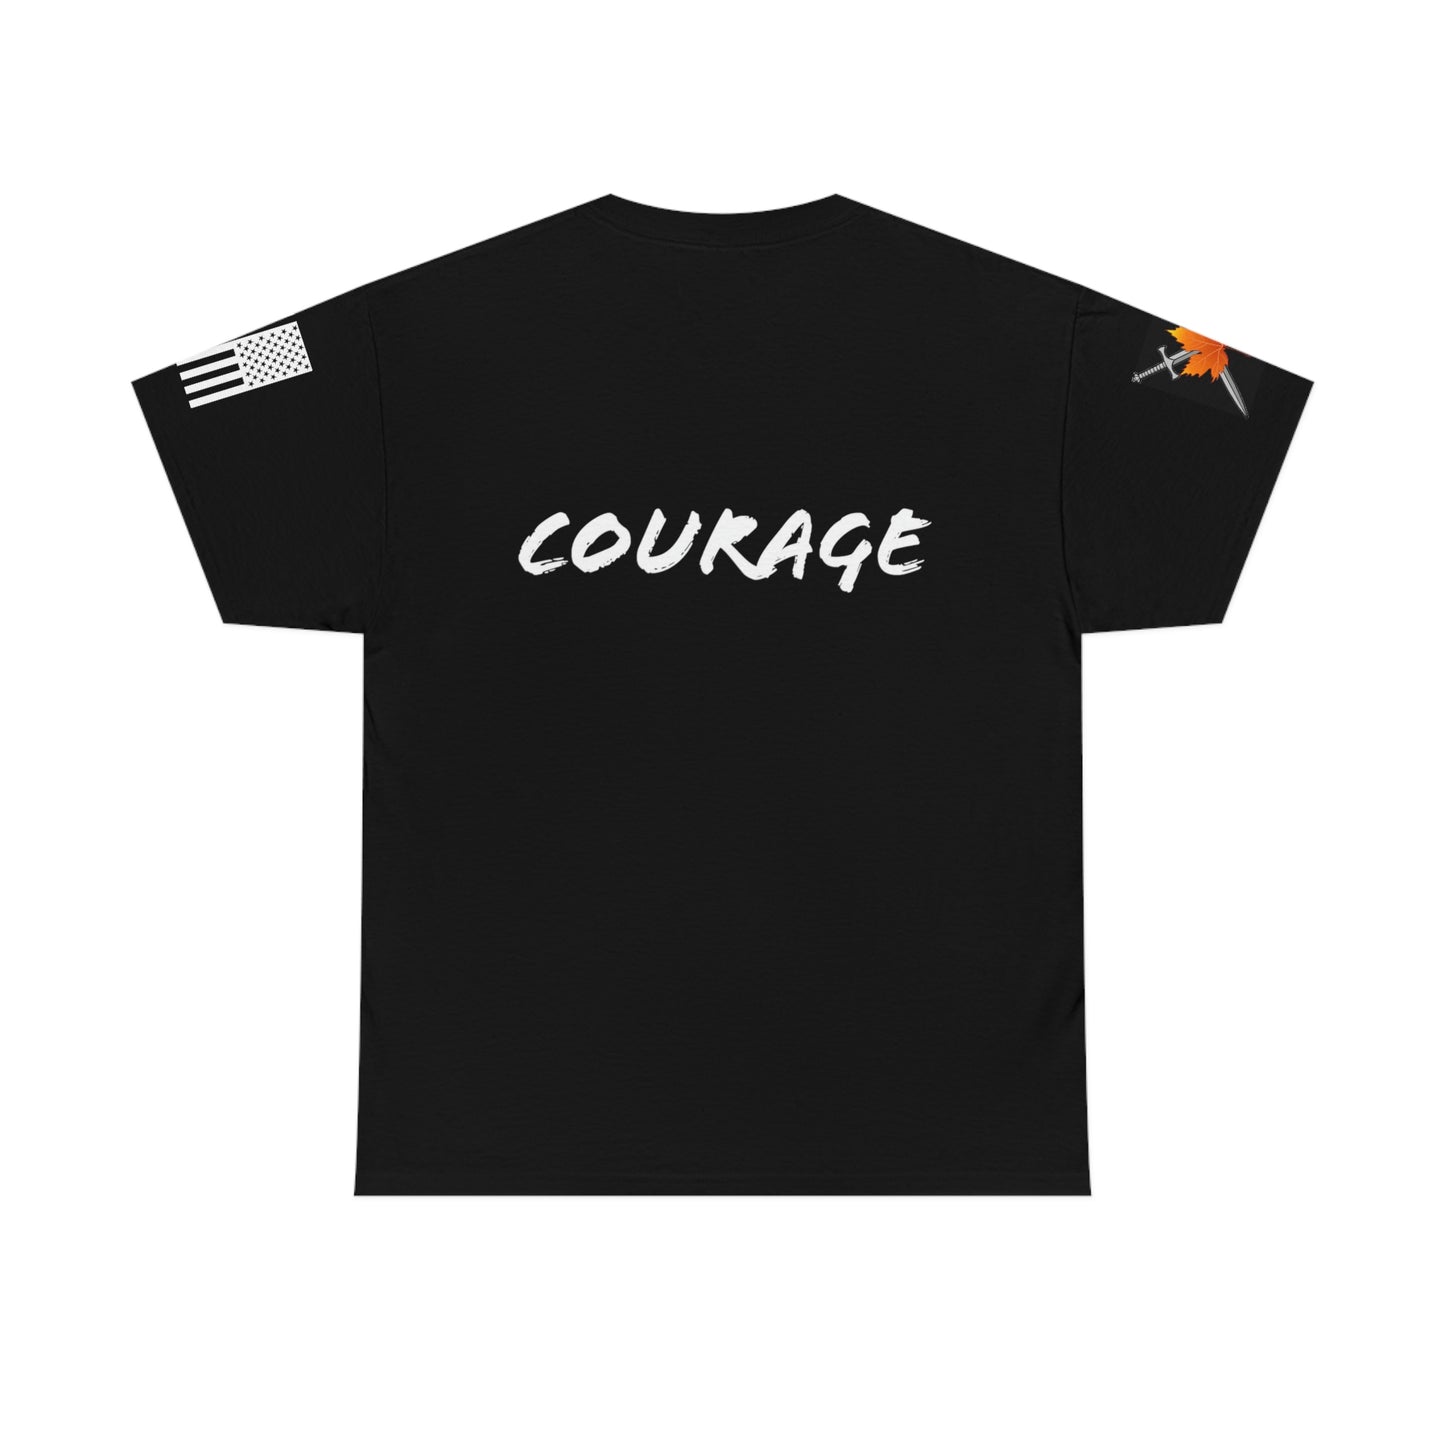 Autumn Knights - Short Sleeve Tee "Courage" (Dark Colors)